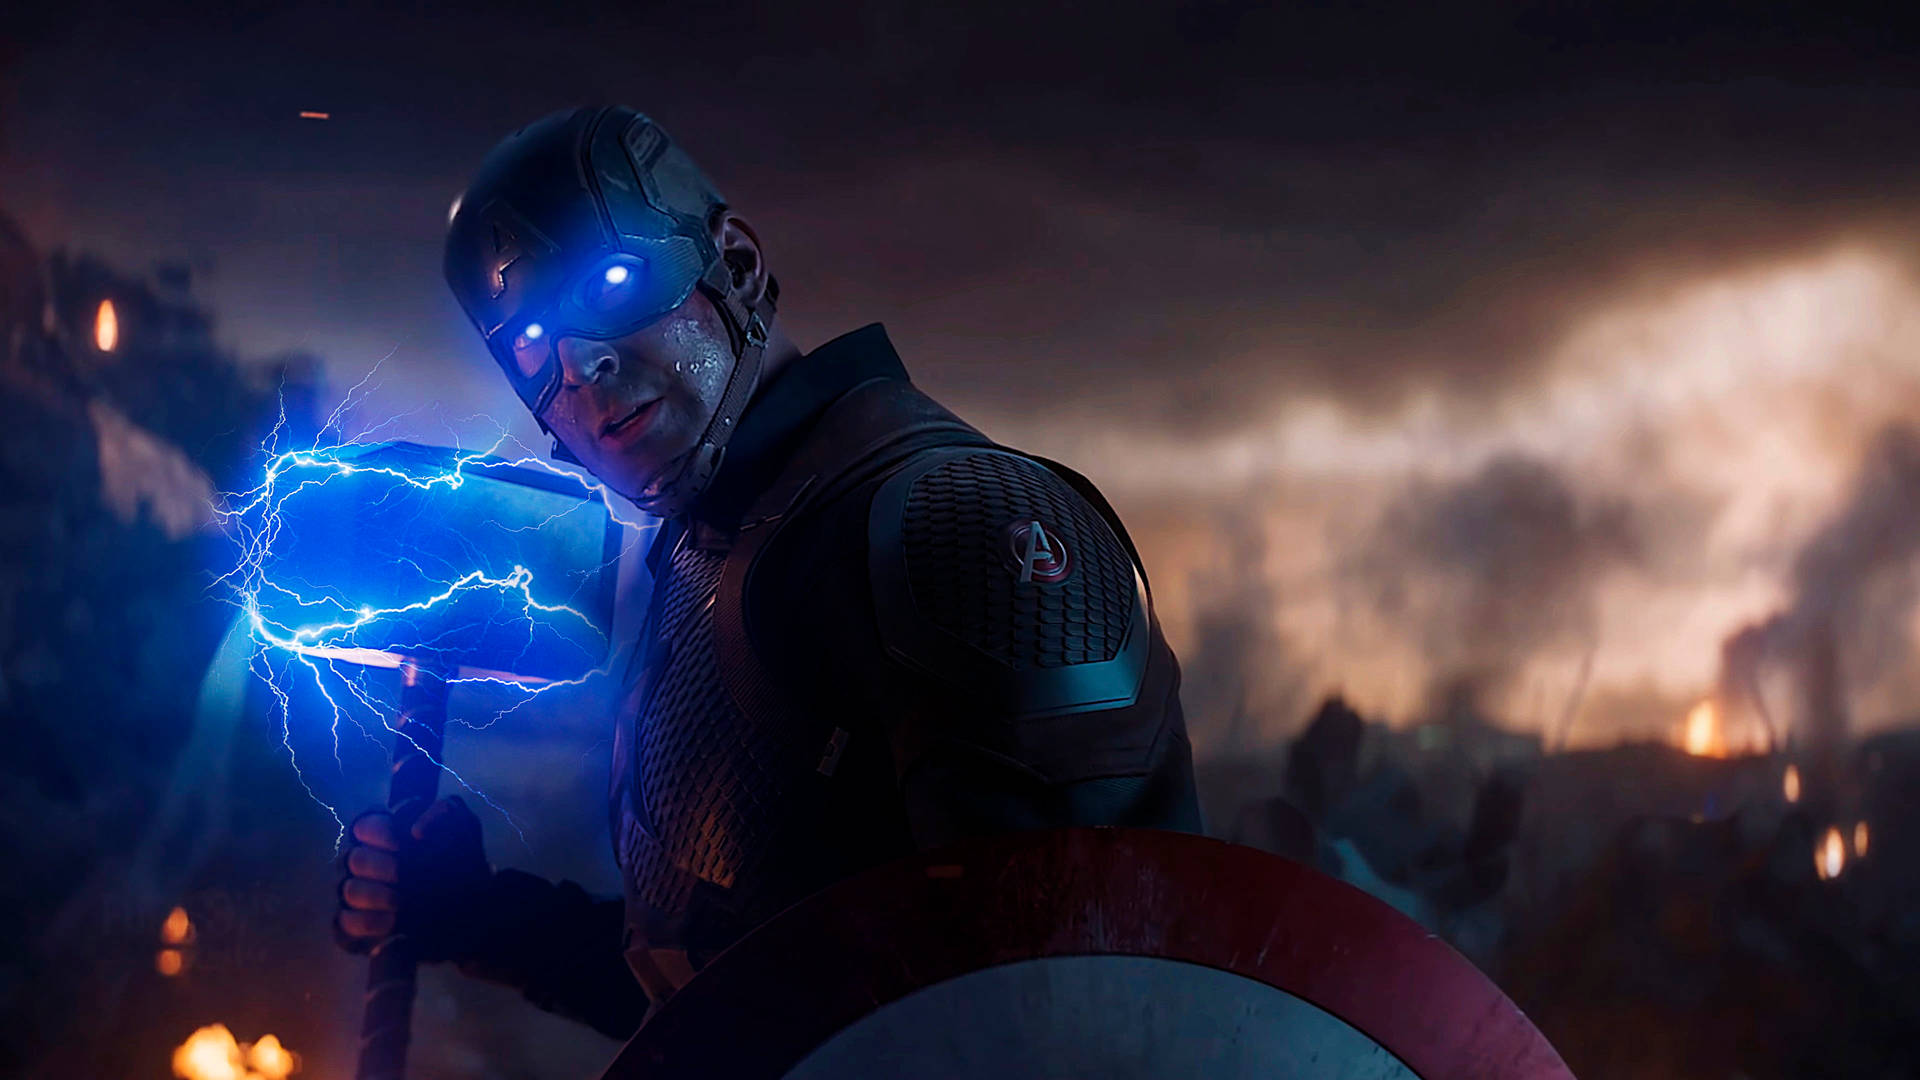 Enklassisk Look - Marvels Captain America Wallpaper